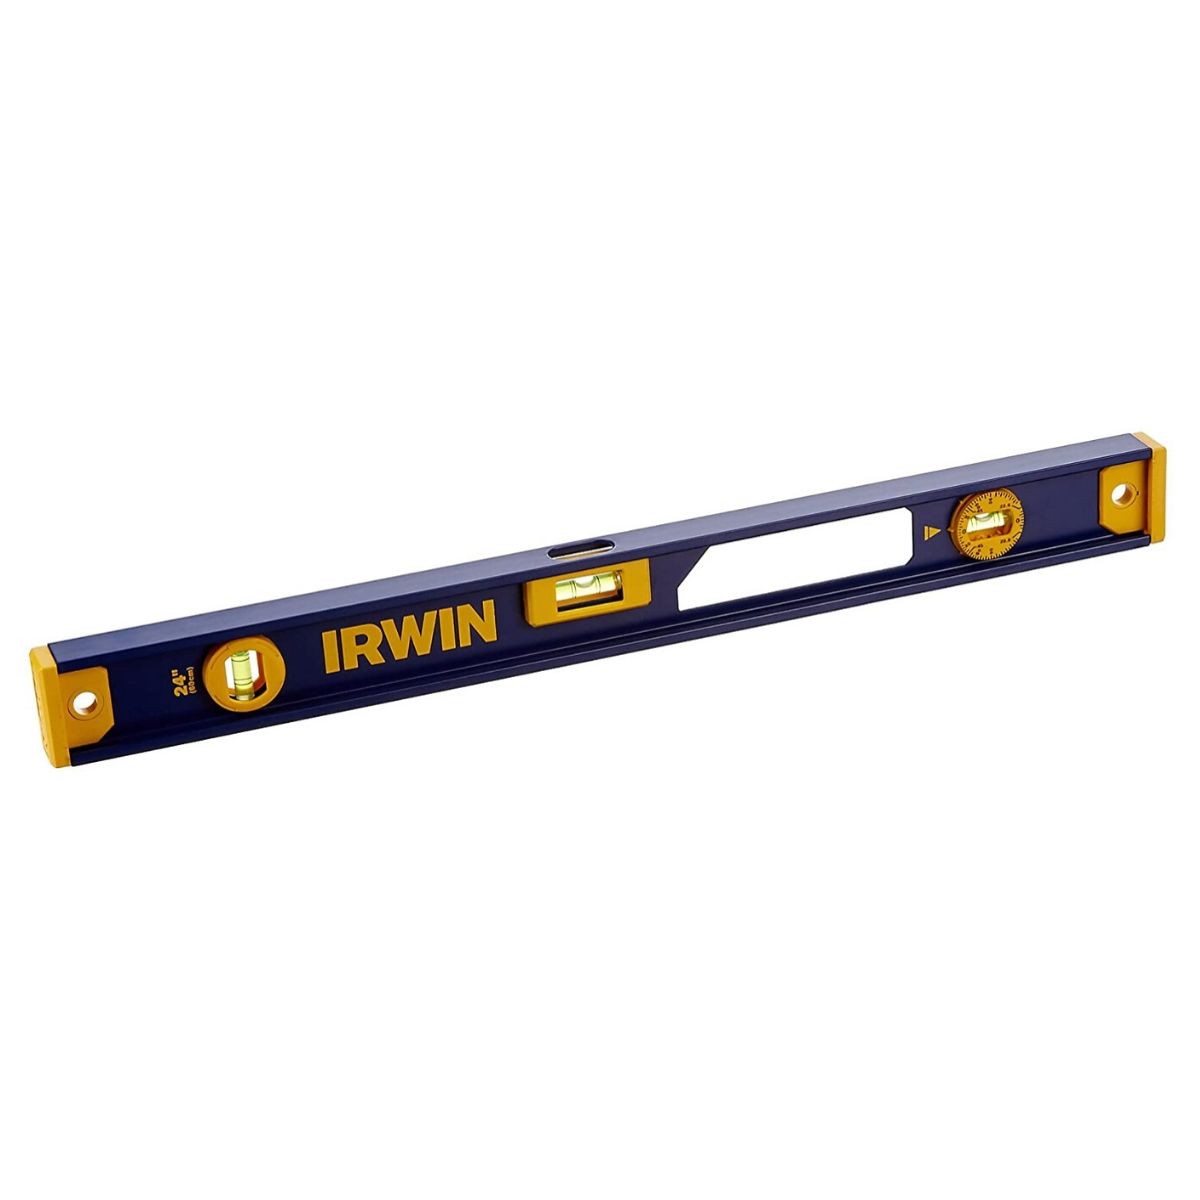 Irwin Tools 1050 Magnetic 24-Inch I-Beam Level